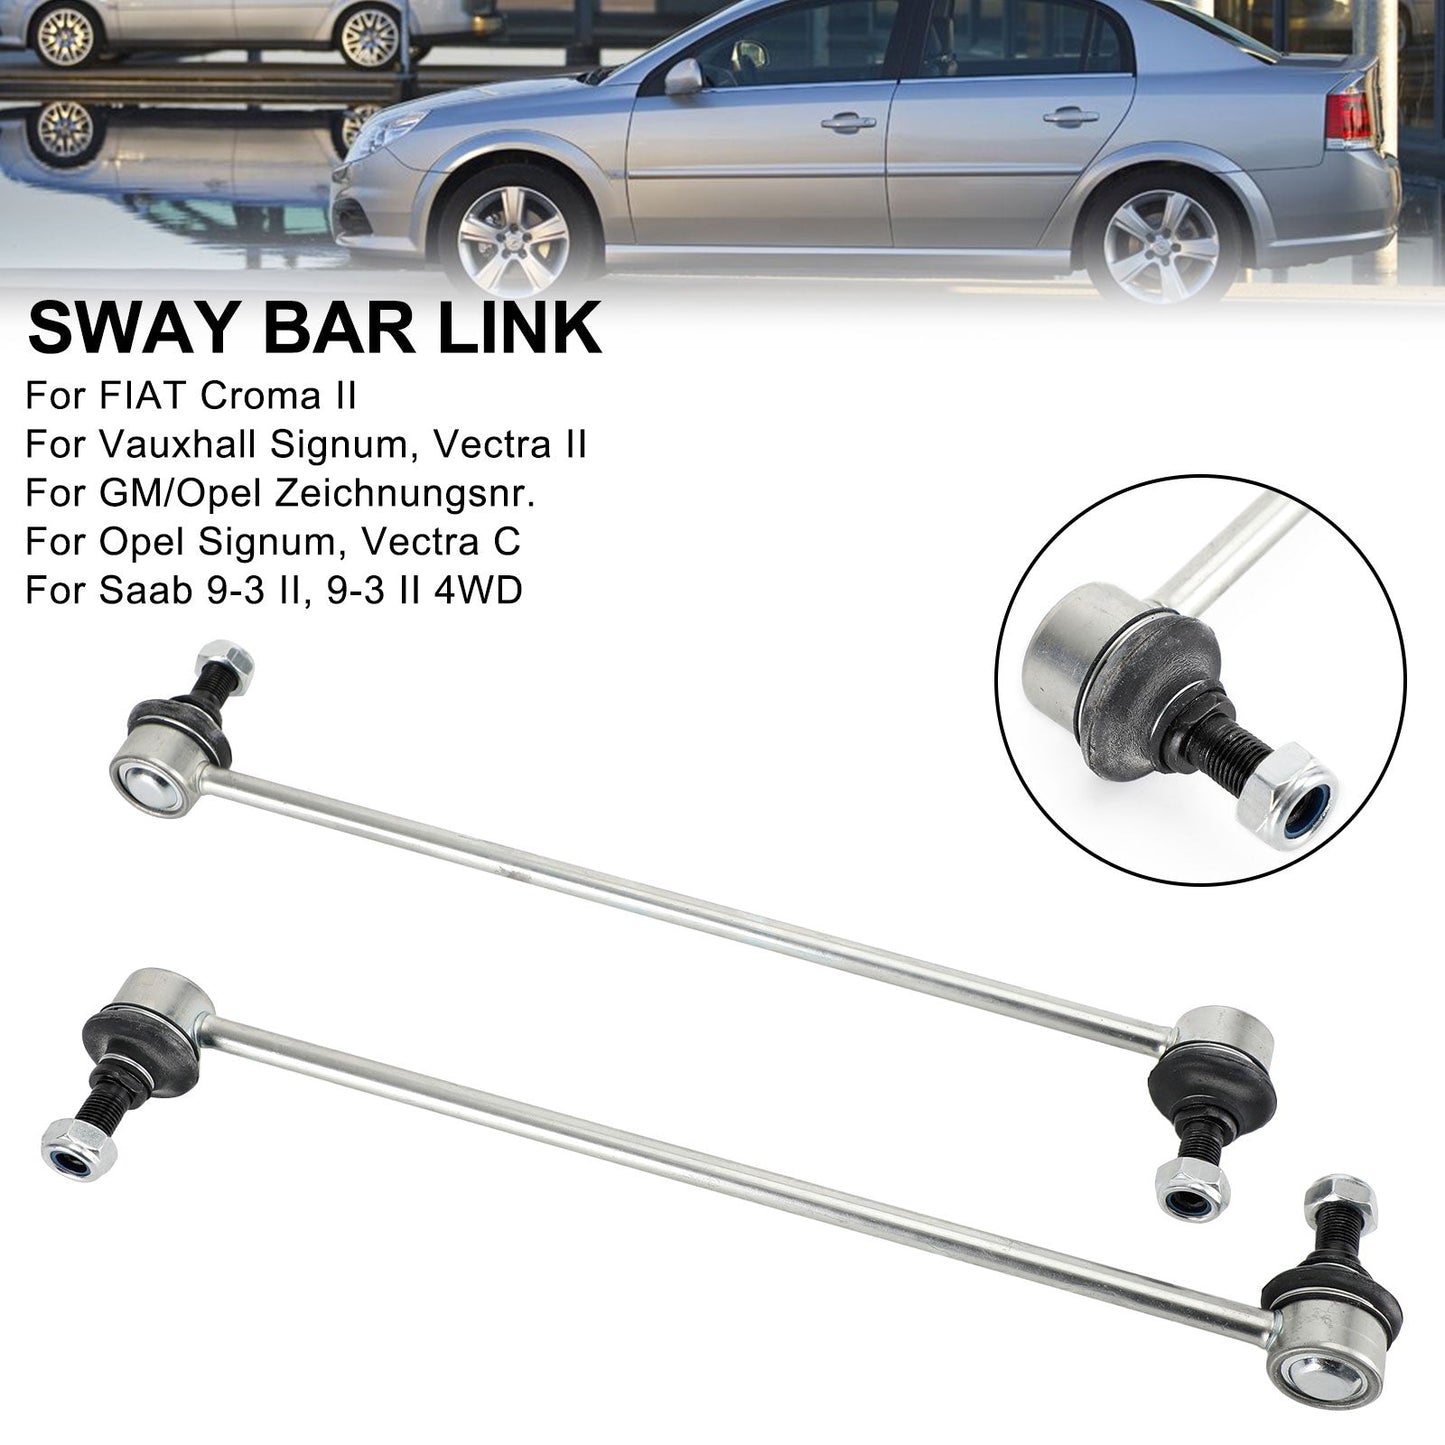 2pcs Front Sway Bar Link for Opel Vectra C Signum Saab 9-3 13237130 2441725